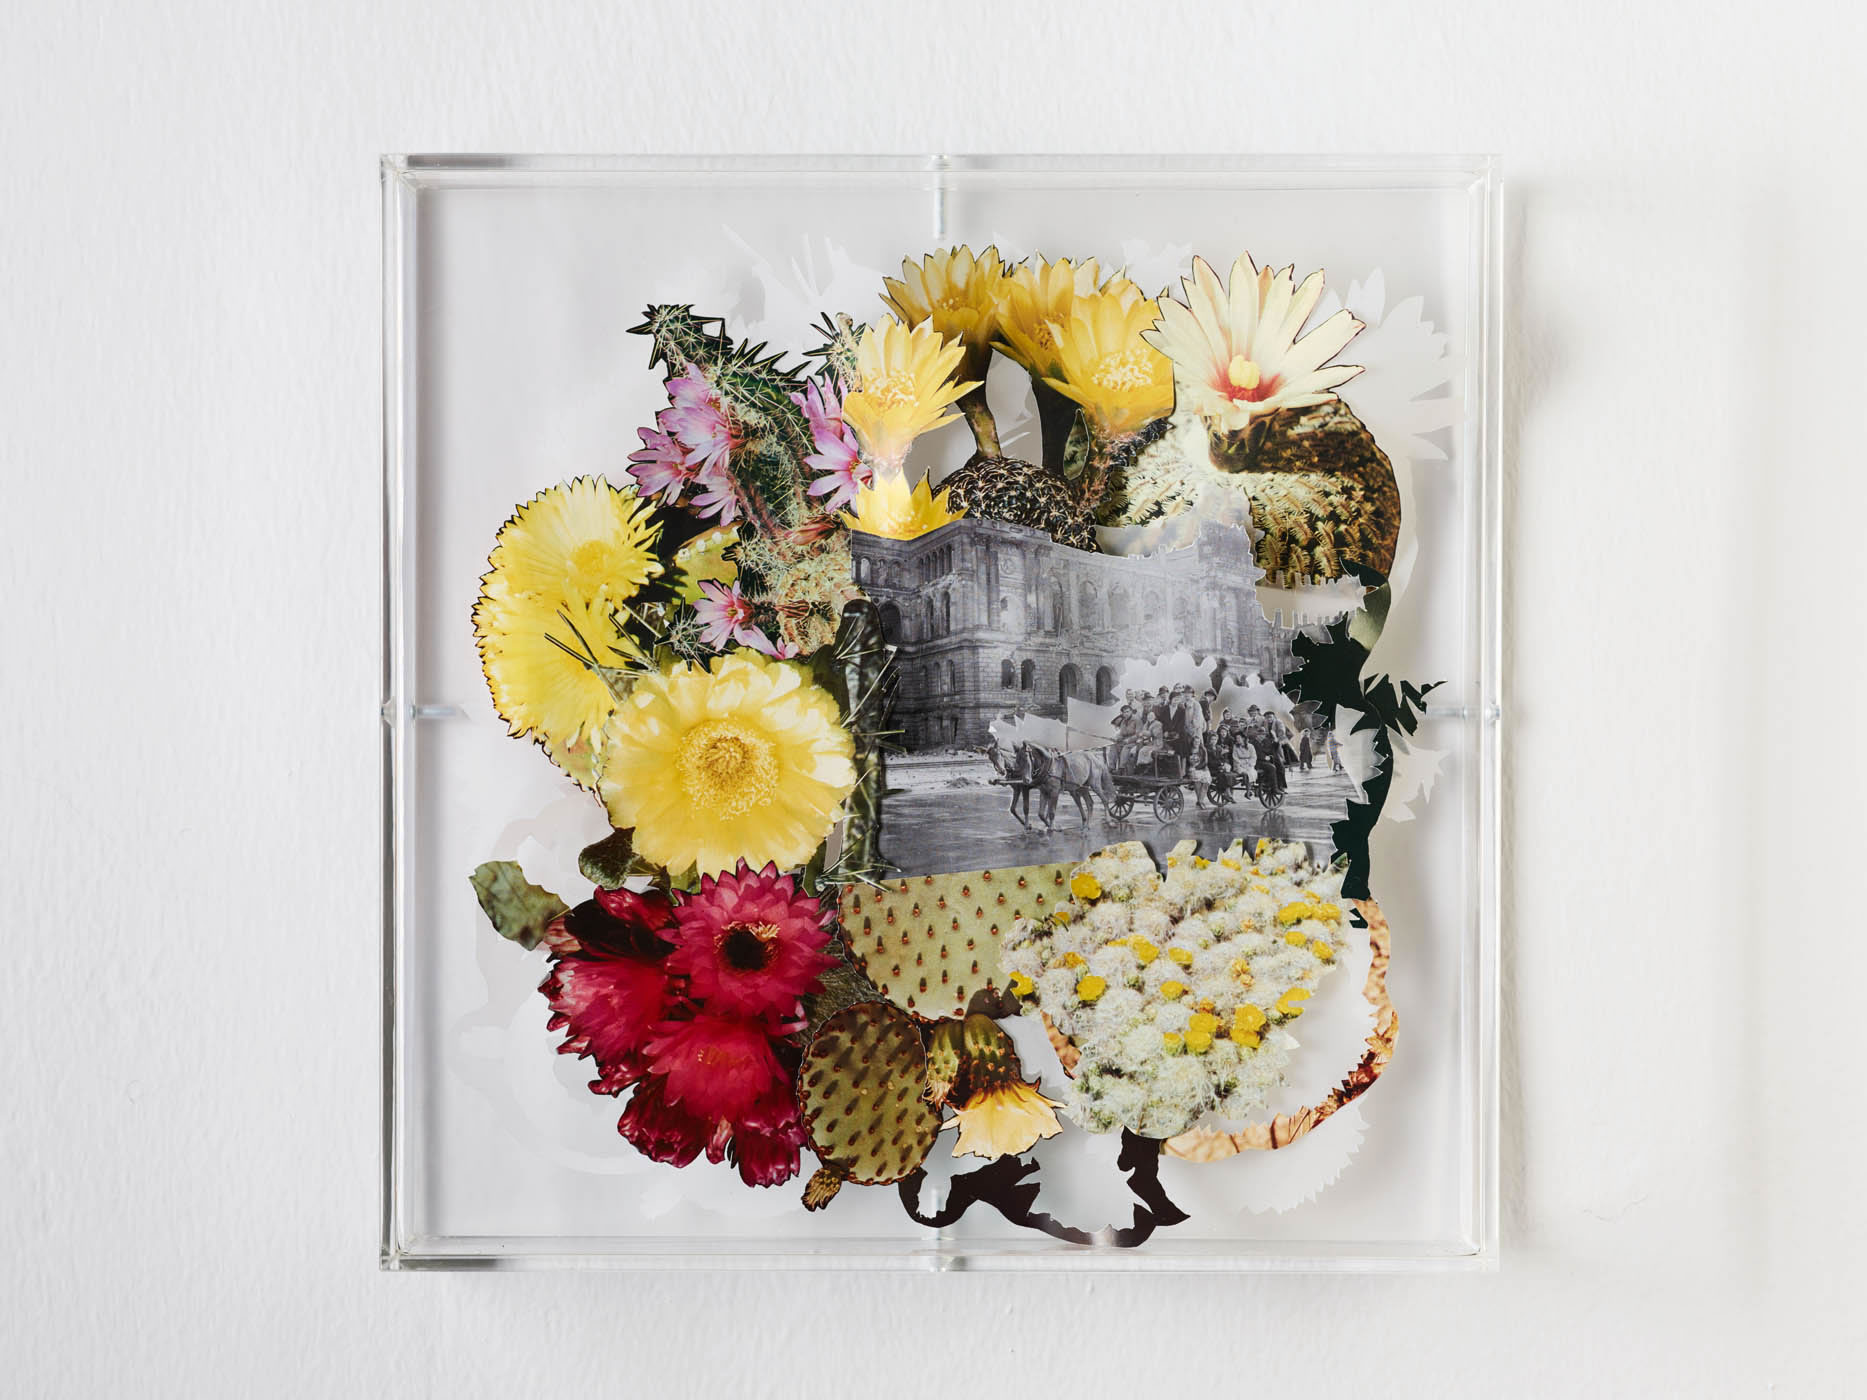 Karen Elliot | Berlin Blooming | 2017 | 30x30cm | Collage in Acrylglaskasten | Foto Johannes Puch